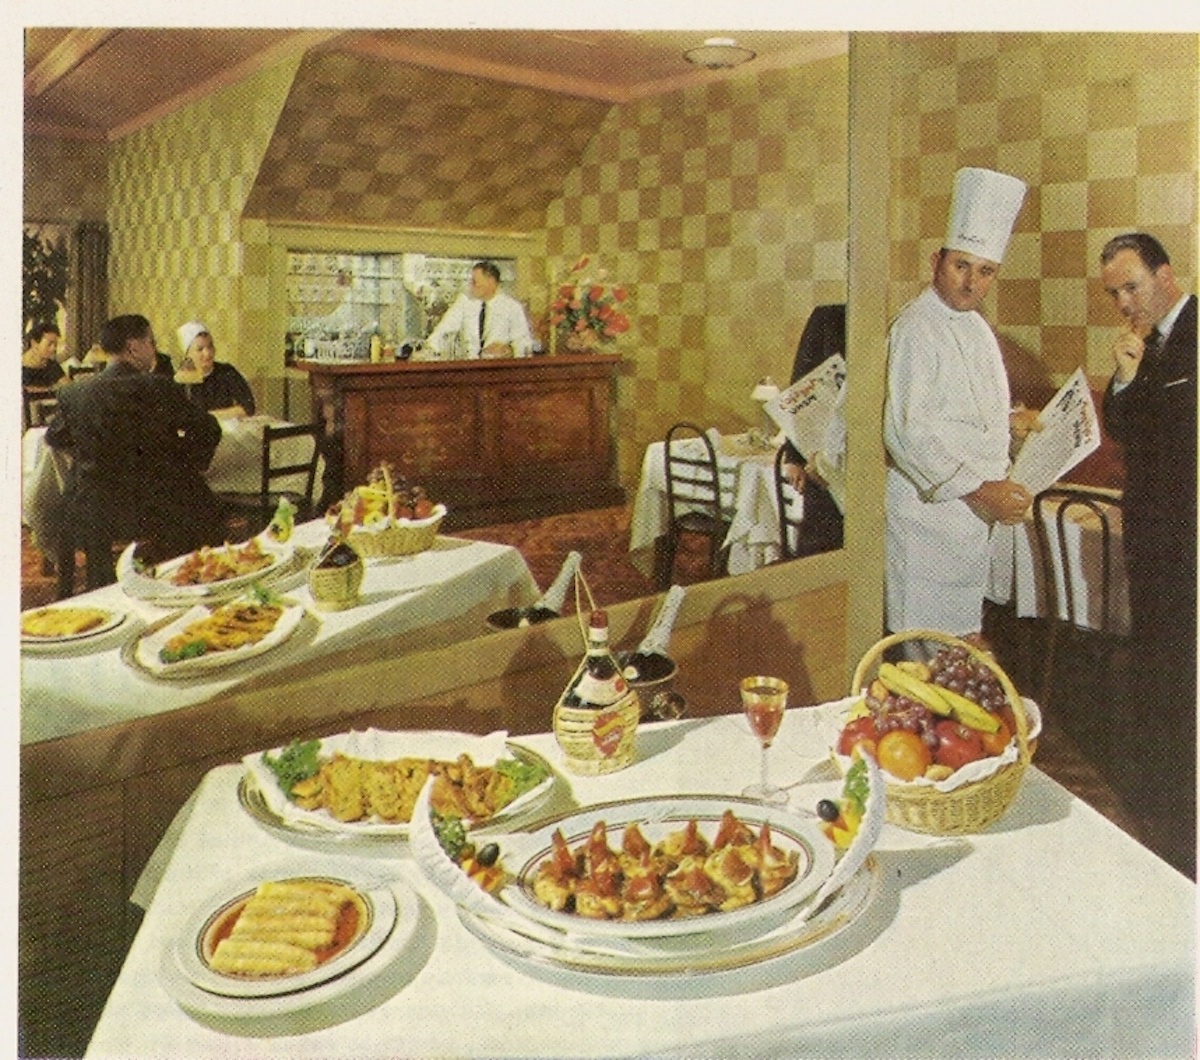 Amelio's Of San Francisco 1958, Life Picture Cookbook